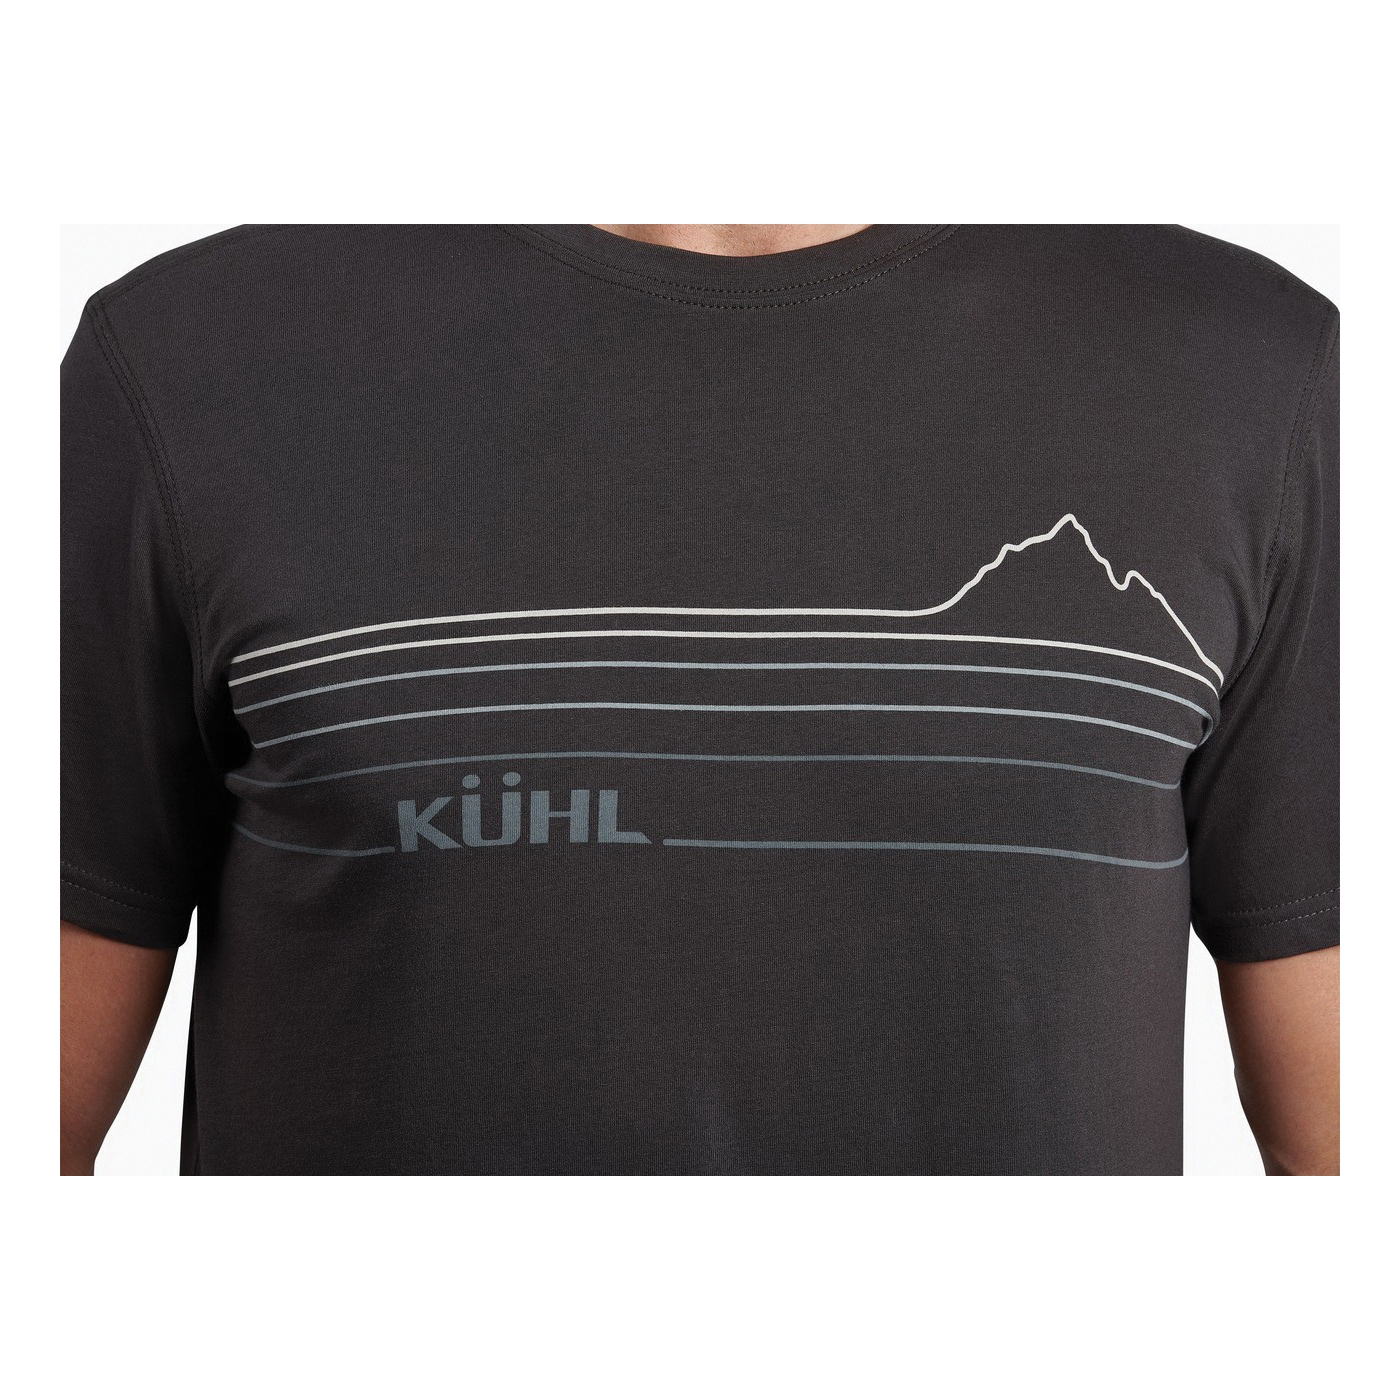 KUHL MOUNTAIN LINES Series 7397-WH-M T-Shirt, M, Cotton, White, KUHL Graphic Print/Pattern, Short Sleeve, Klassik Fit - 4